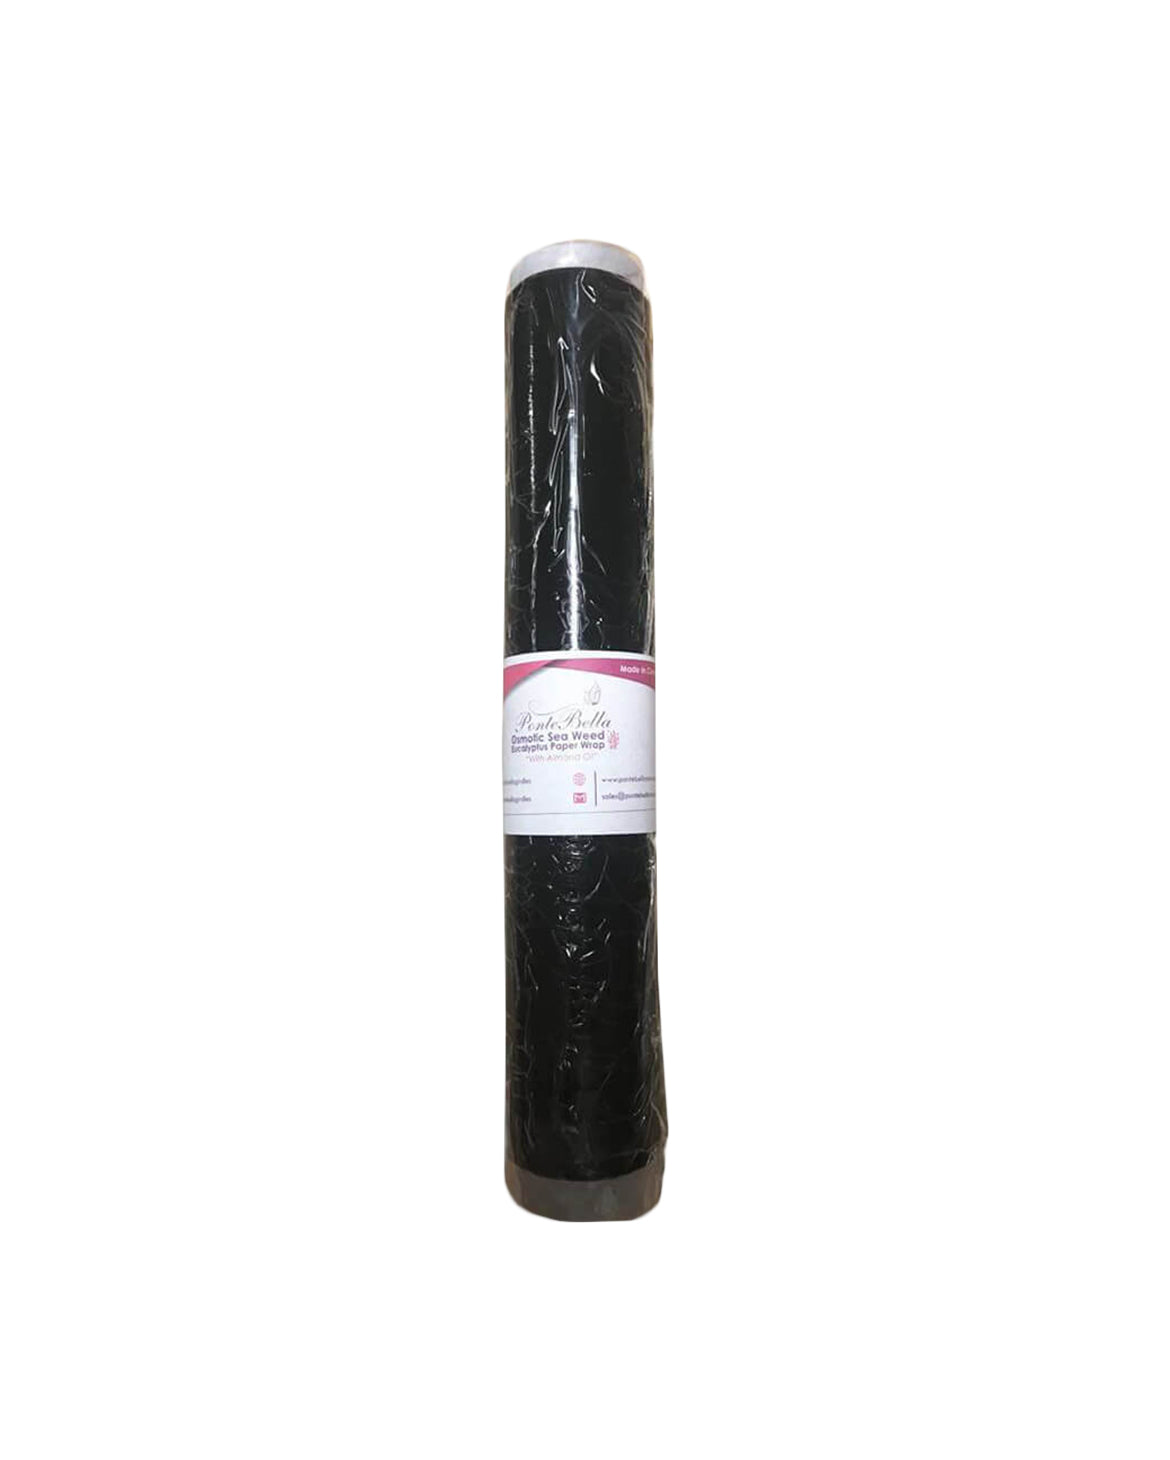 Osmowrap osmotic wrap black 50meters PonteBella